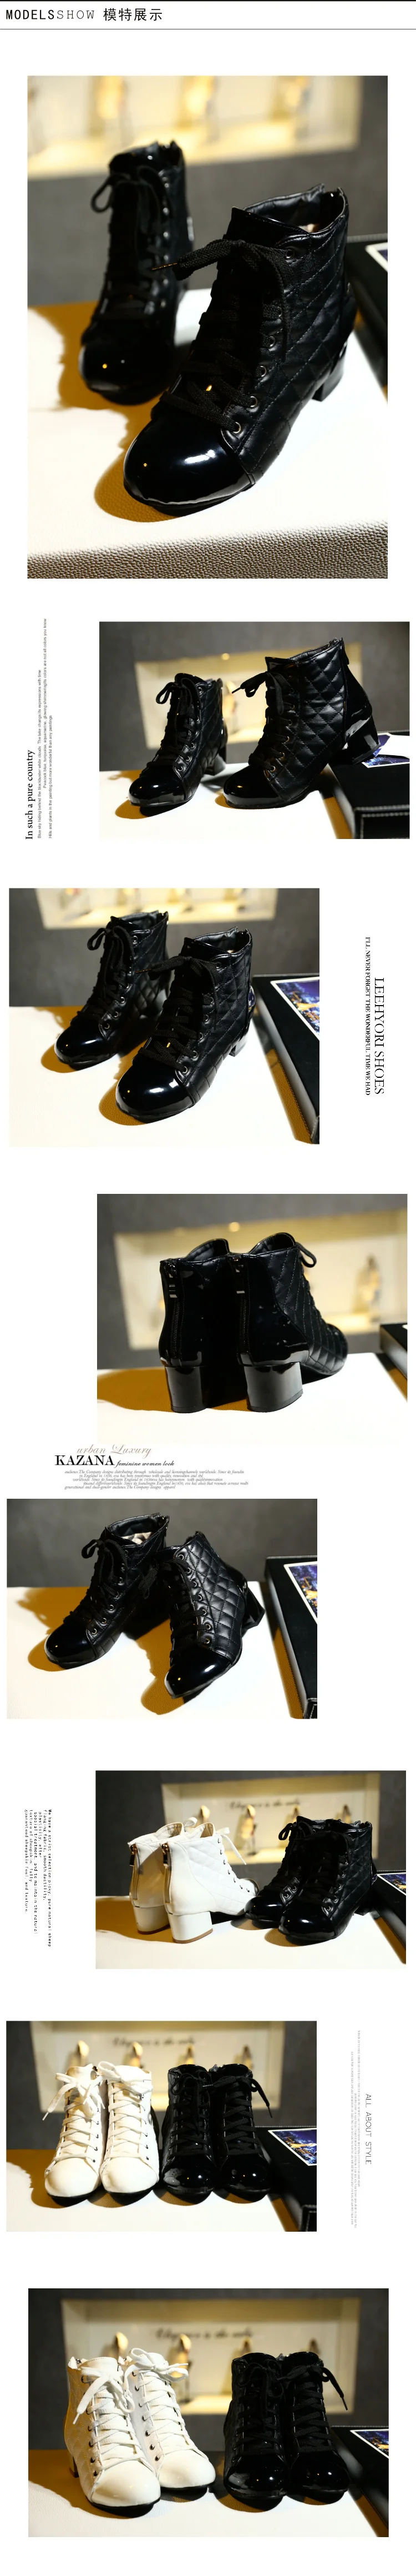 Женские зимние сапоги до середины голени; botas masculina zapatos botines mujer chaussure femme; коллекция 951 года